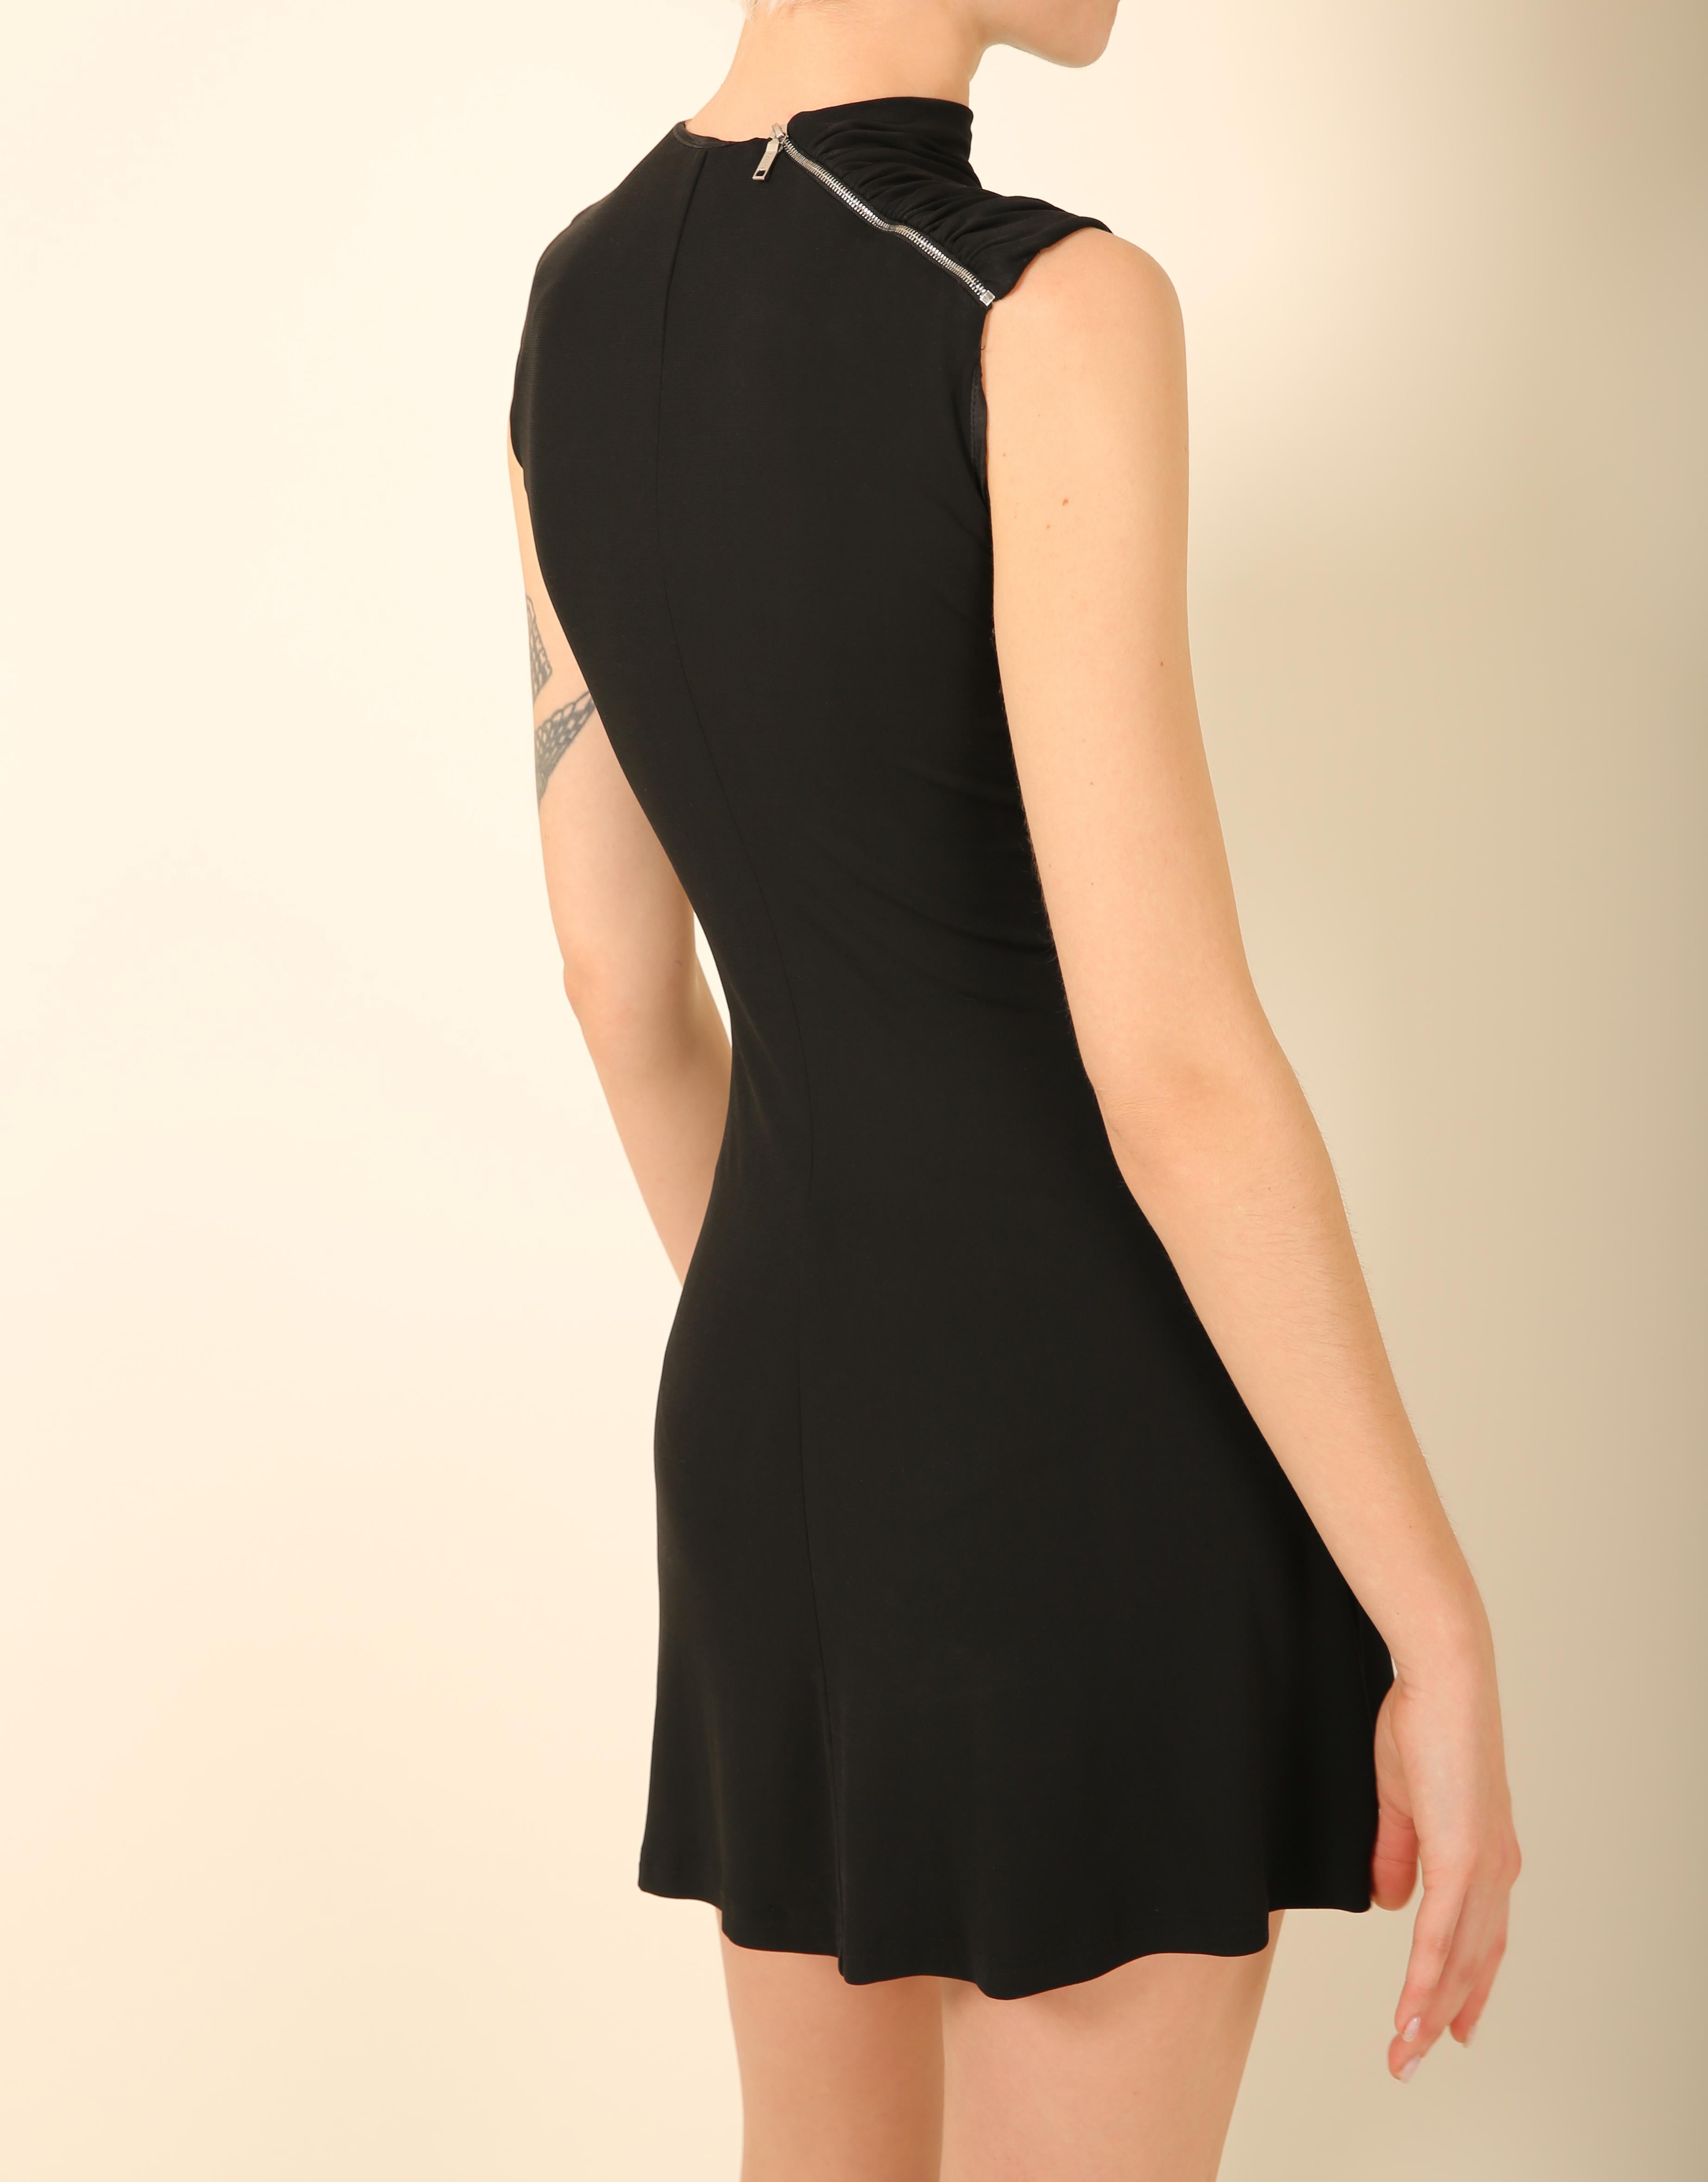 Celine Michael Kors black silver zip up mock neck sleeveless tank mini dress 36 4